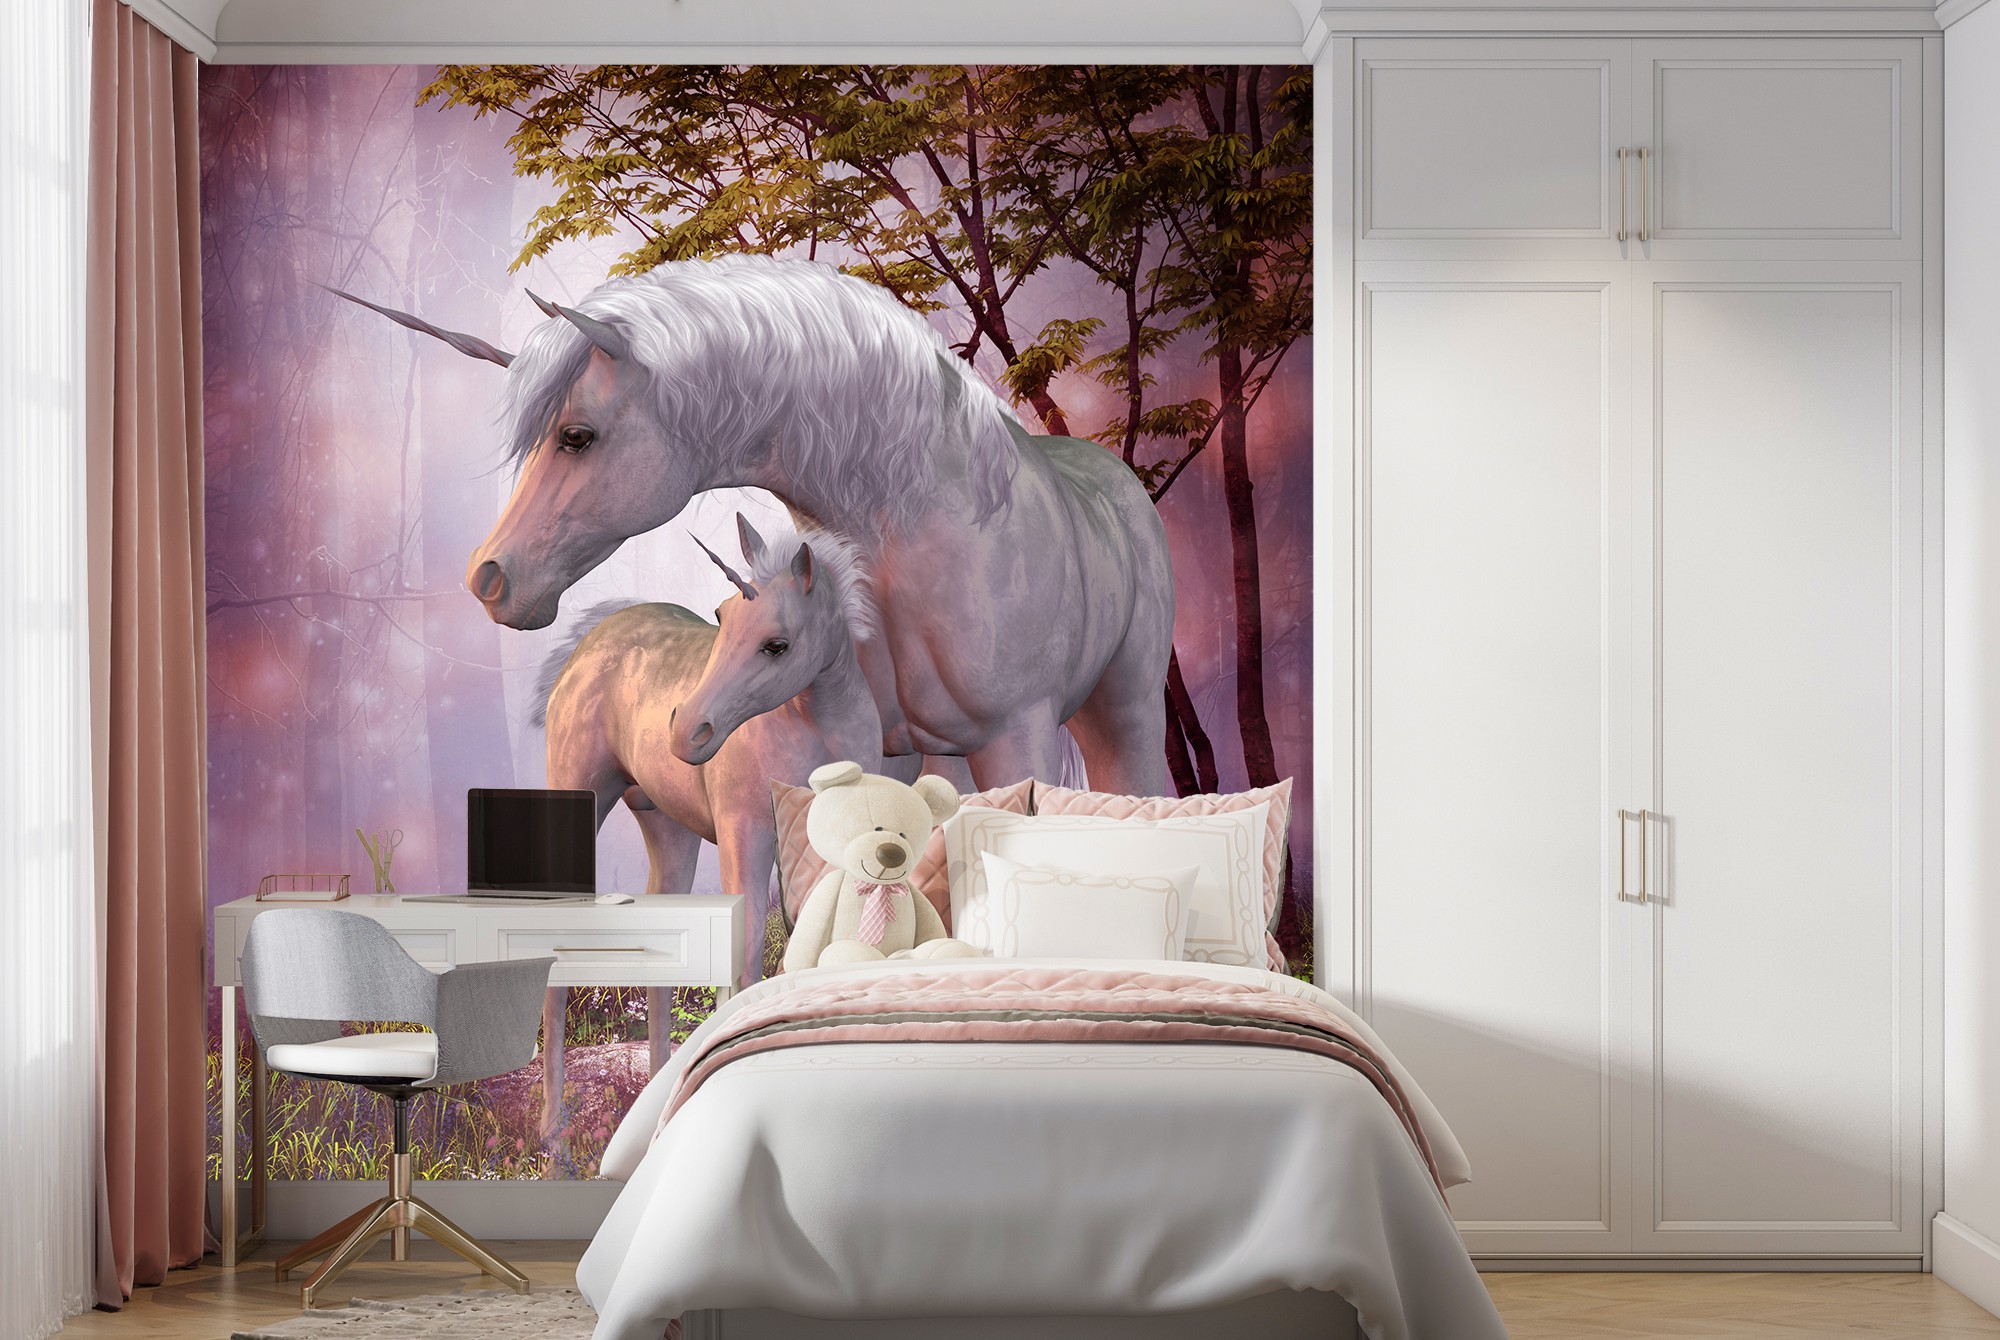 Magical Unicorn & Foal Wall Mural Fantasy Photo Wallpaper Girls Bedroom